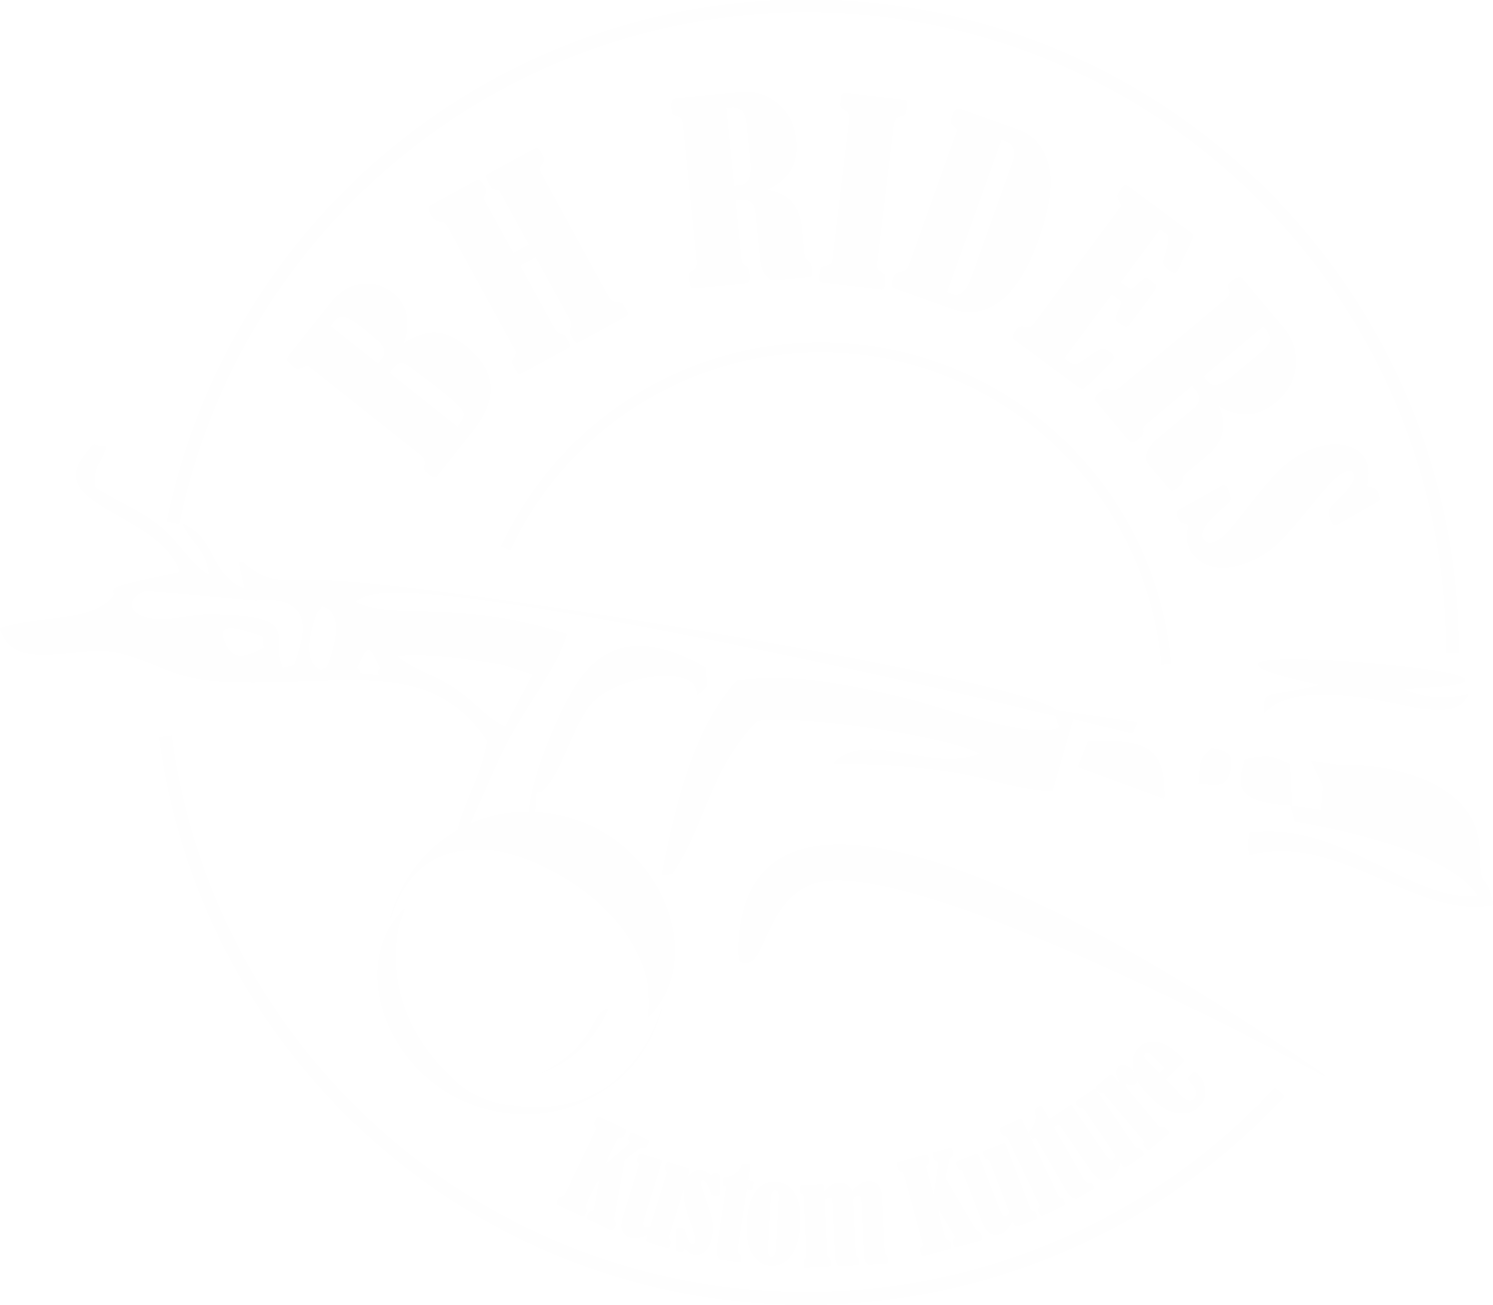 BH Riders